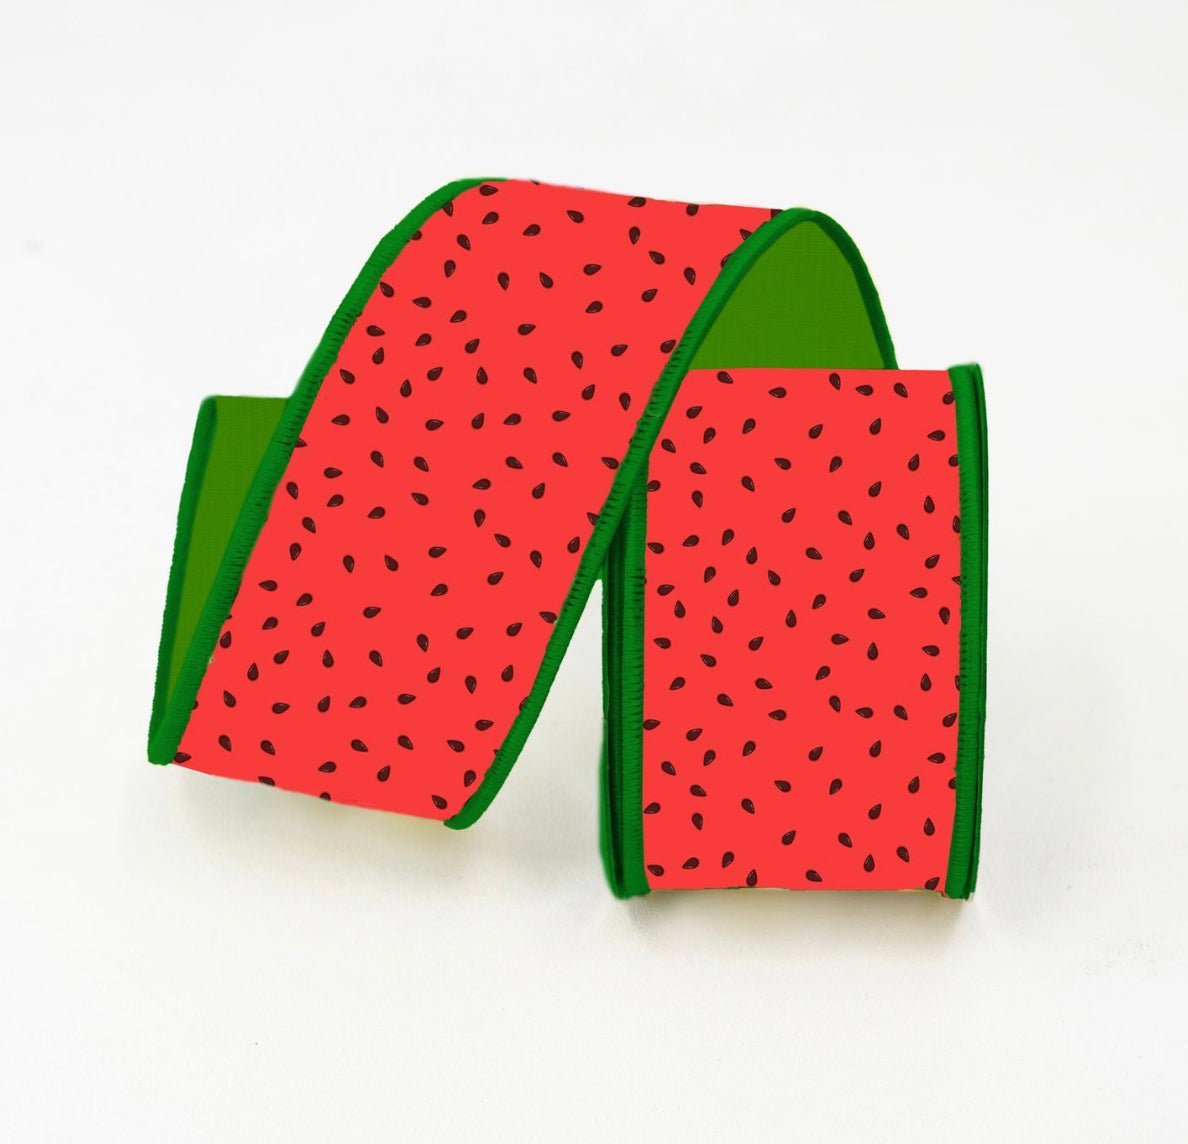 Watermelon seeds 2.5” farrisilk wired ribbon - Greenery MarketRibbons & TrimRk226-48